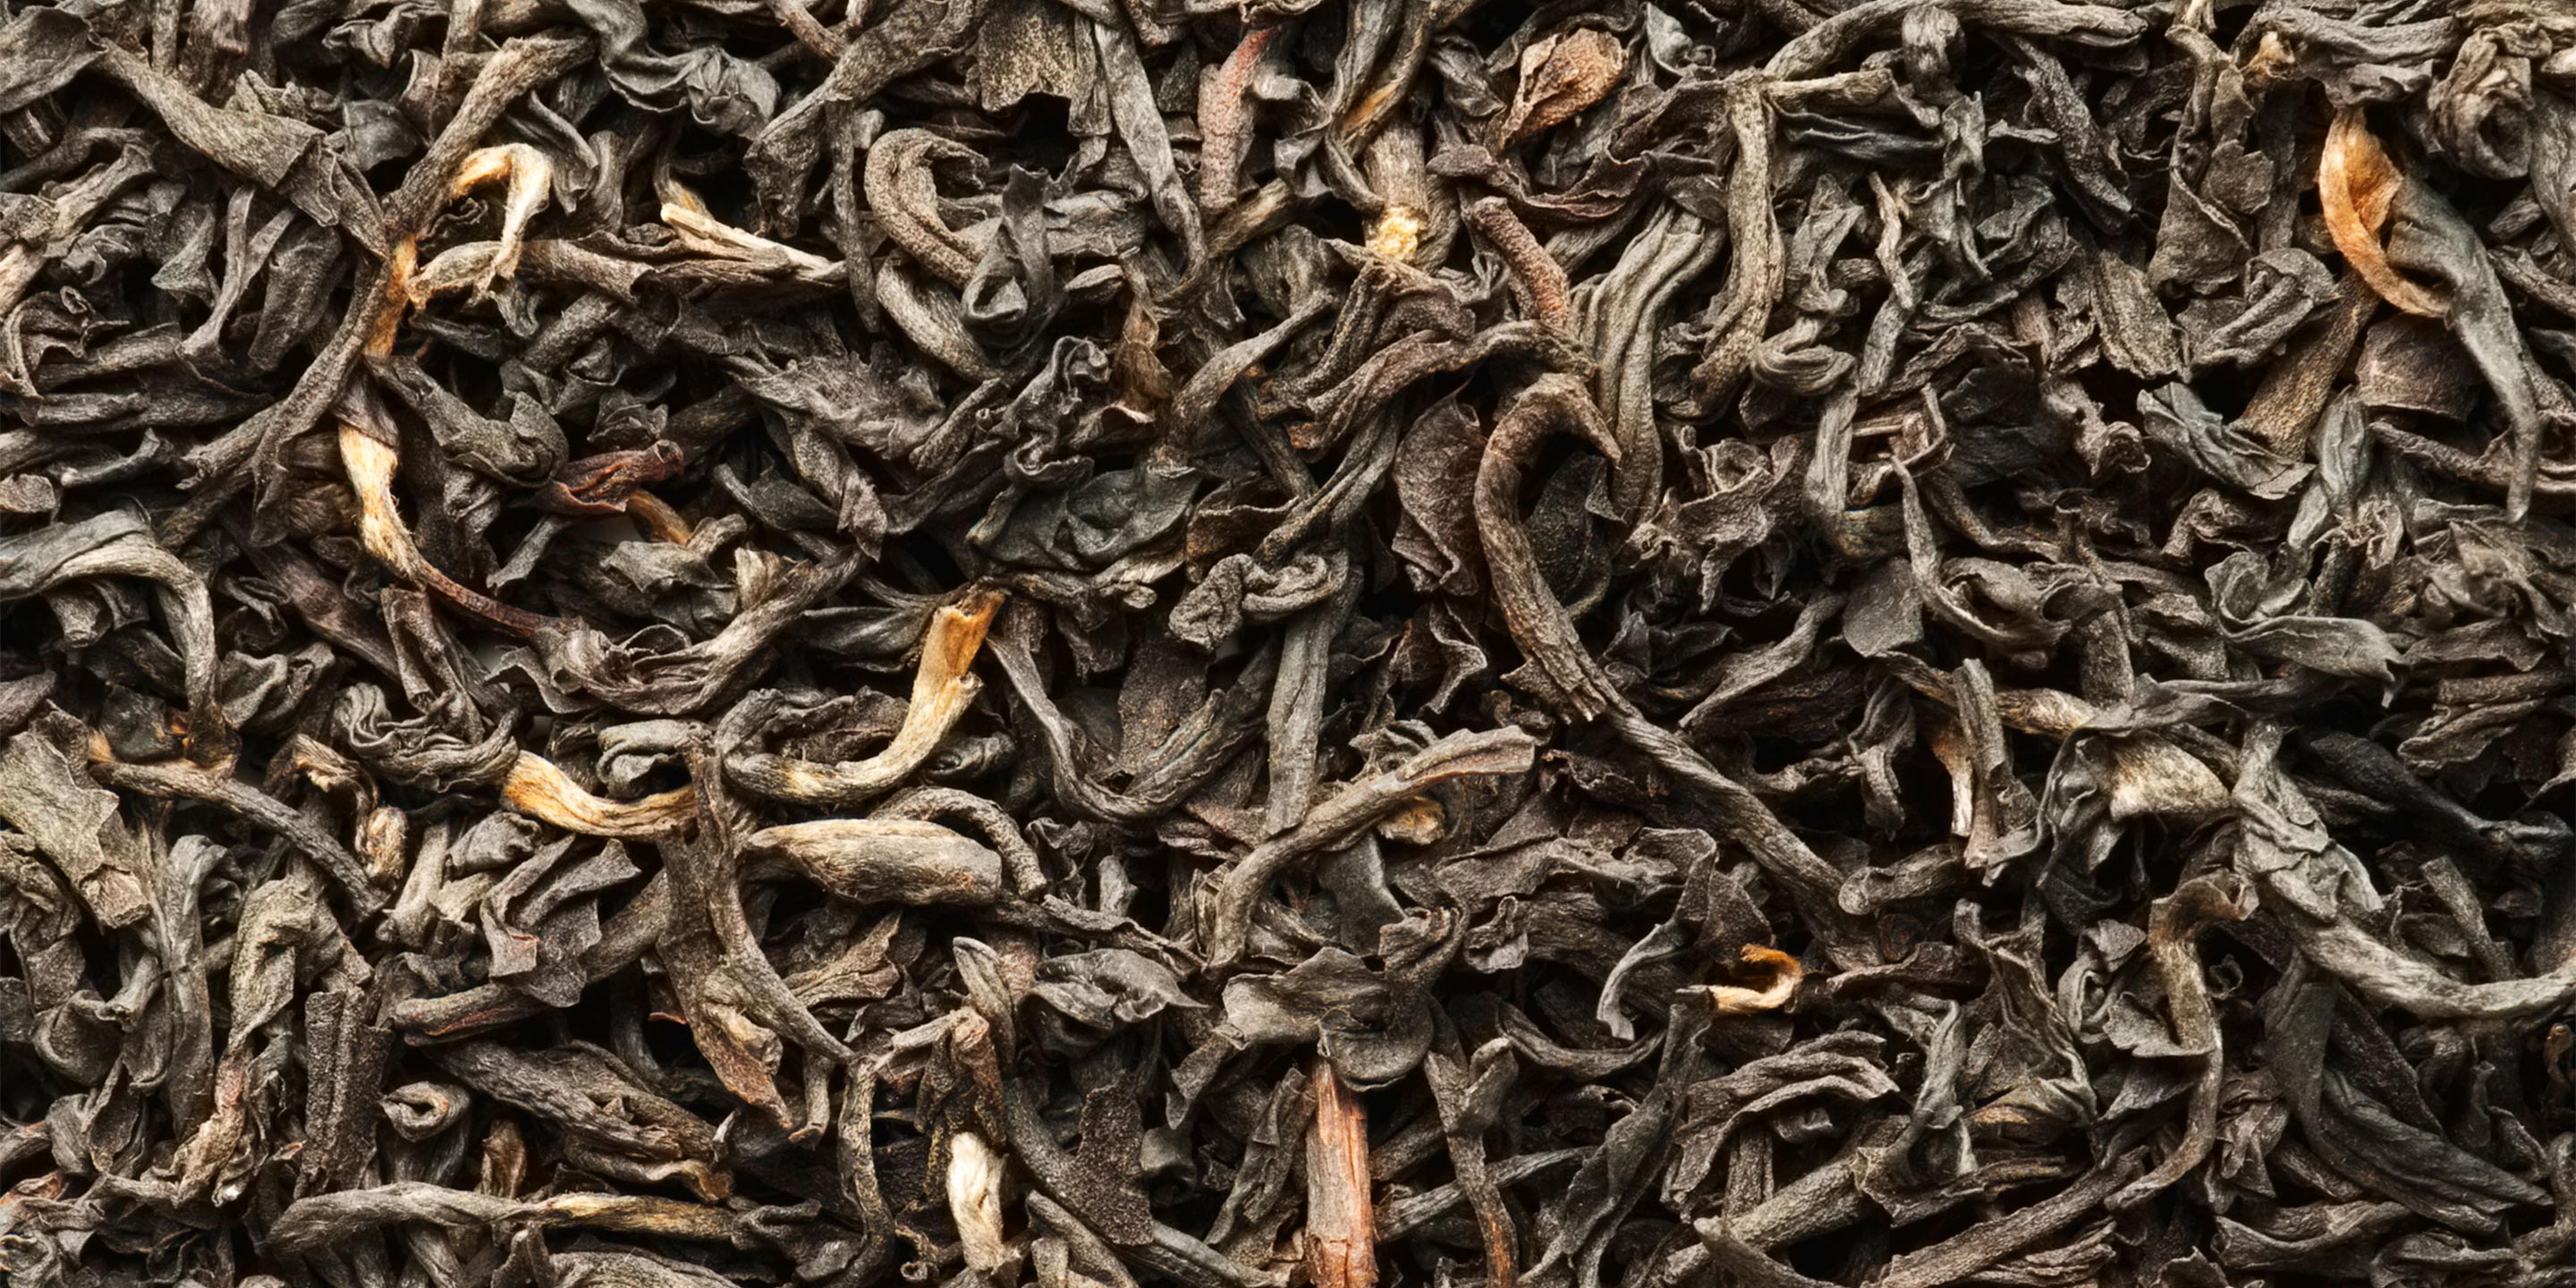 What makes Black Tea black?